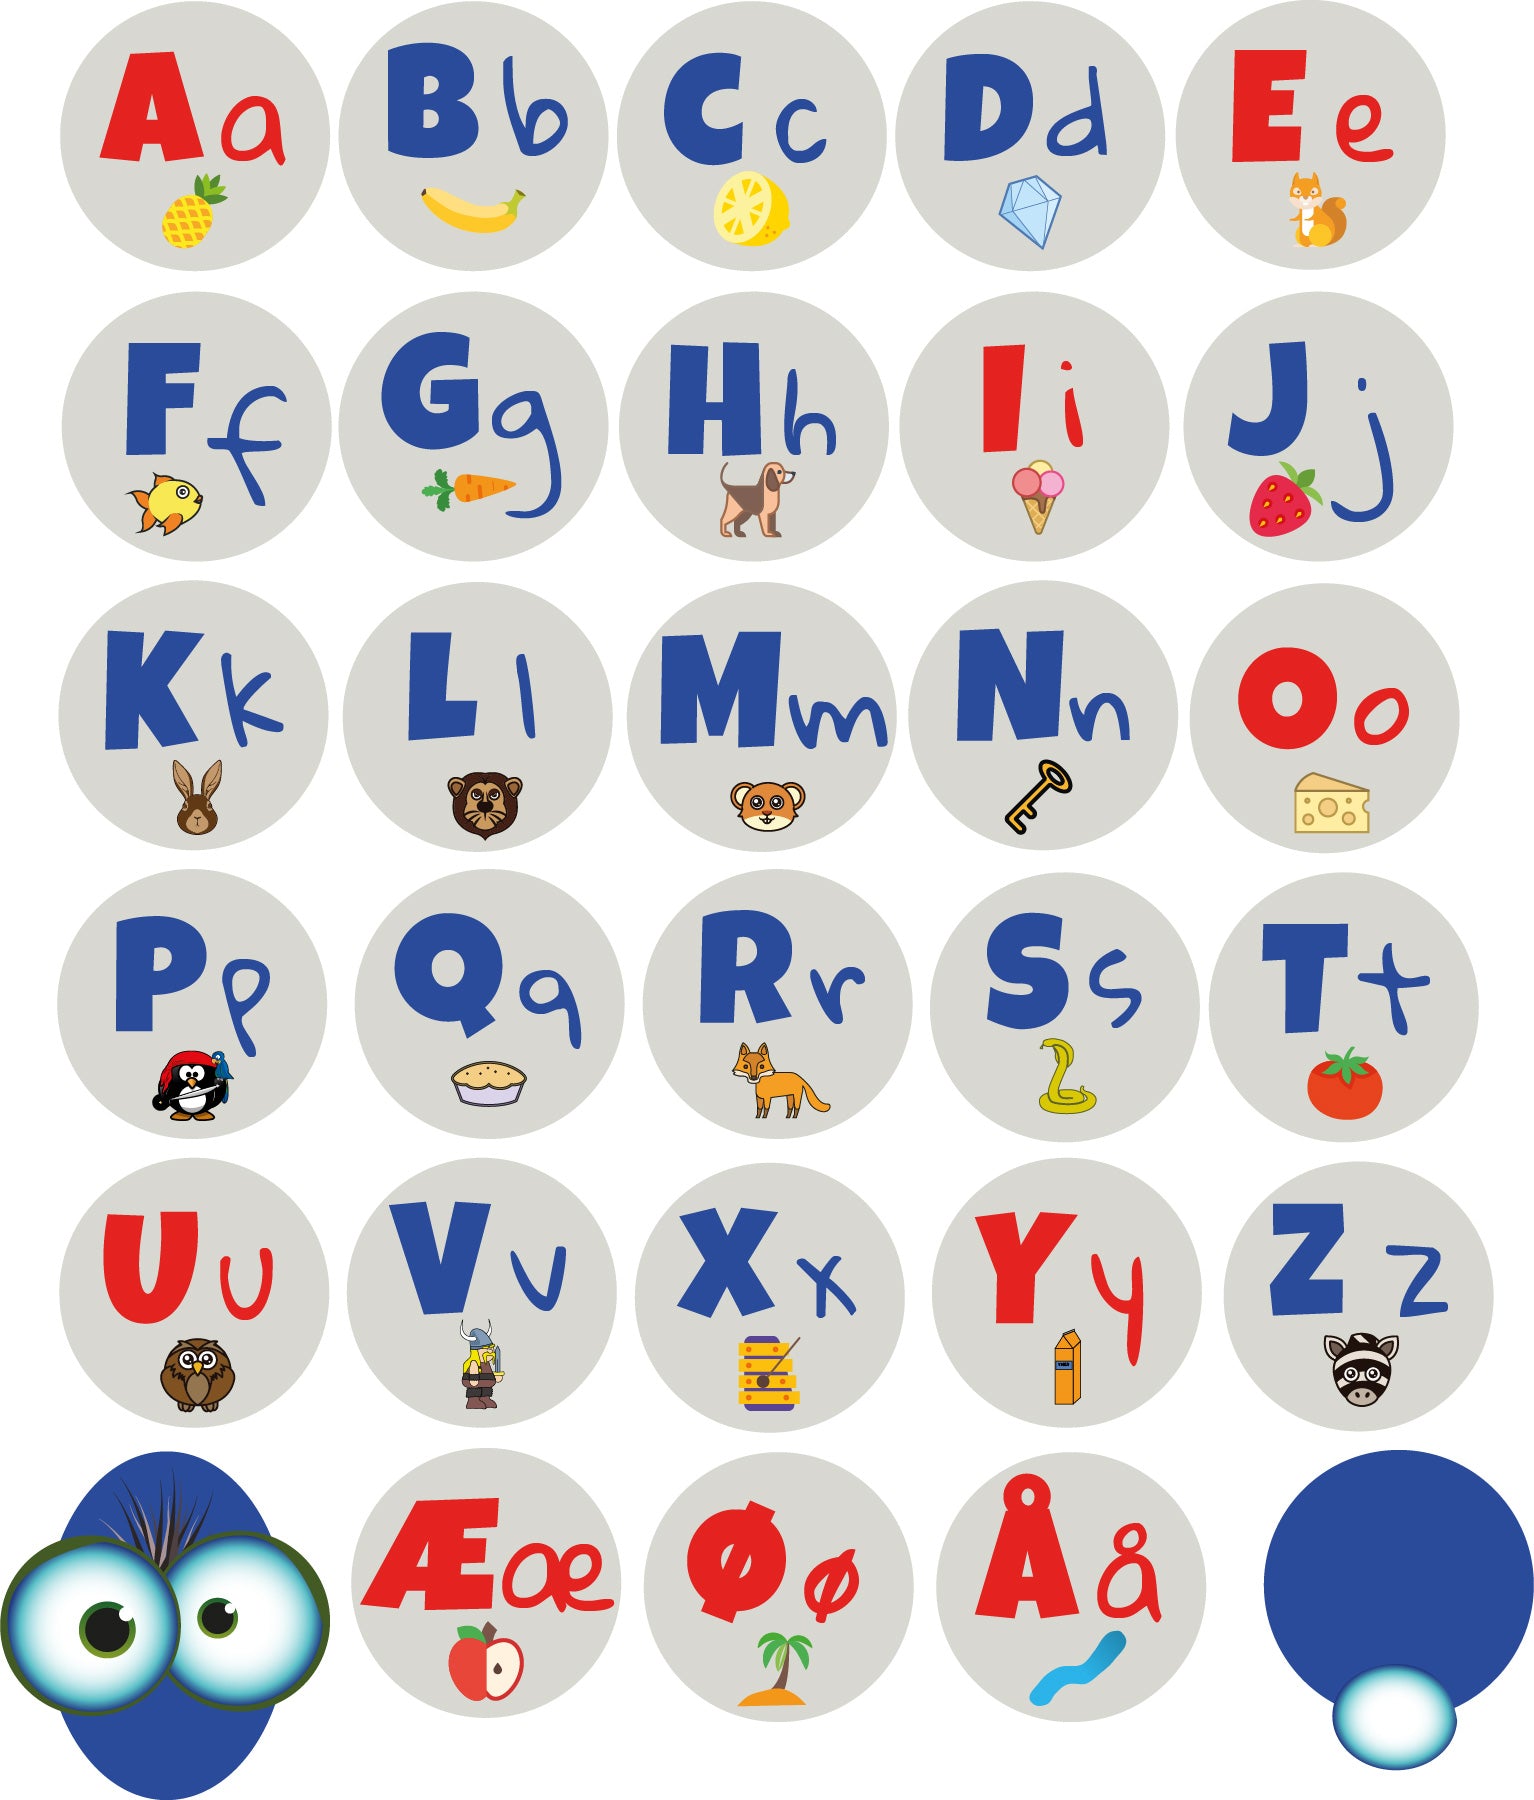 alfabet med vokaler og konsonanter